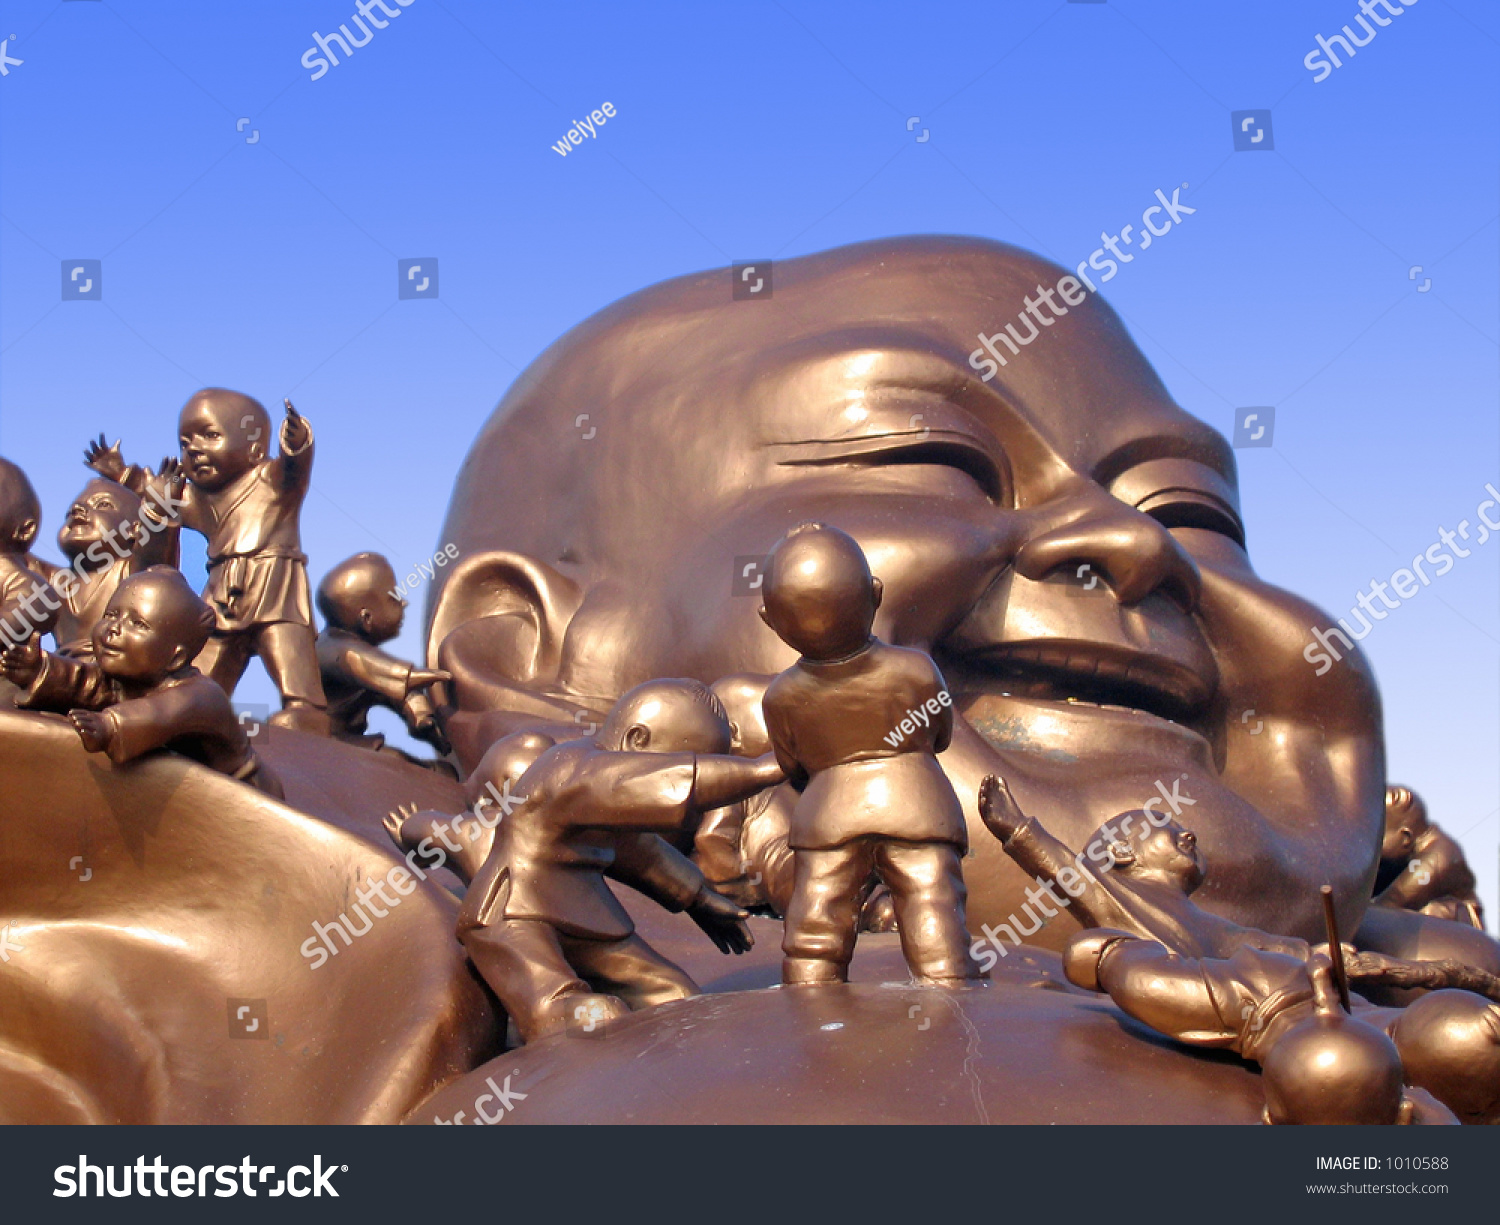 Laughing Buddha With Playful Kids Stock Photo 1010588 Shutterstock